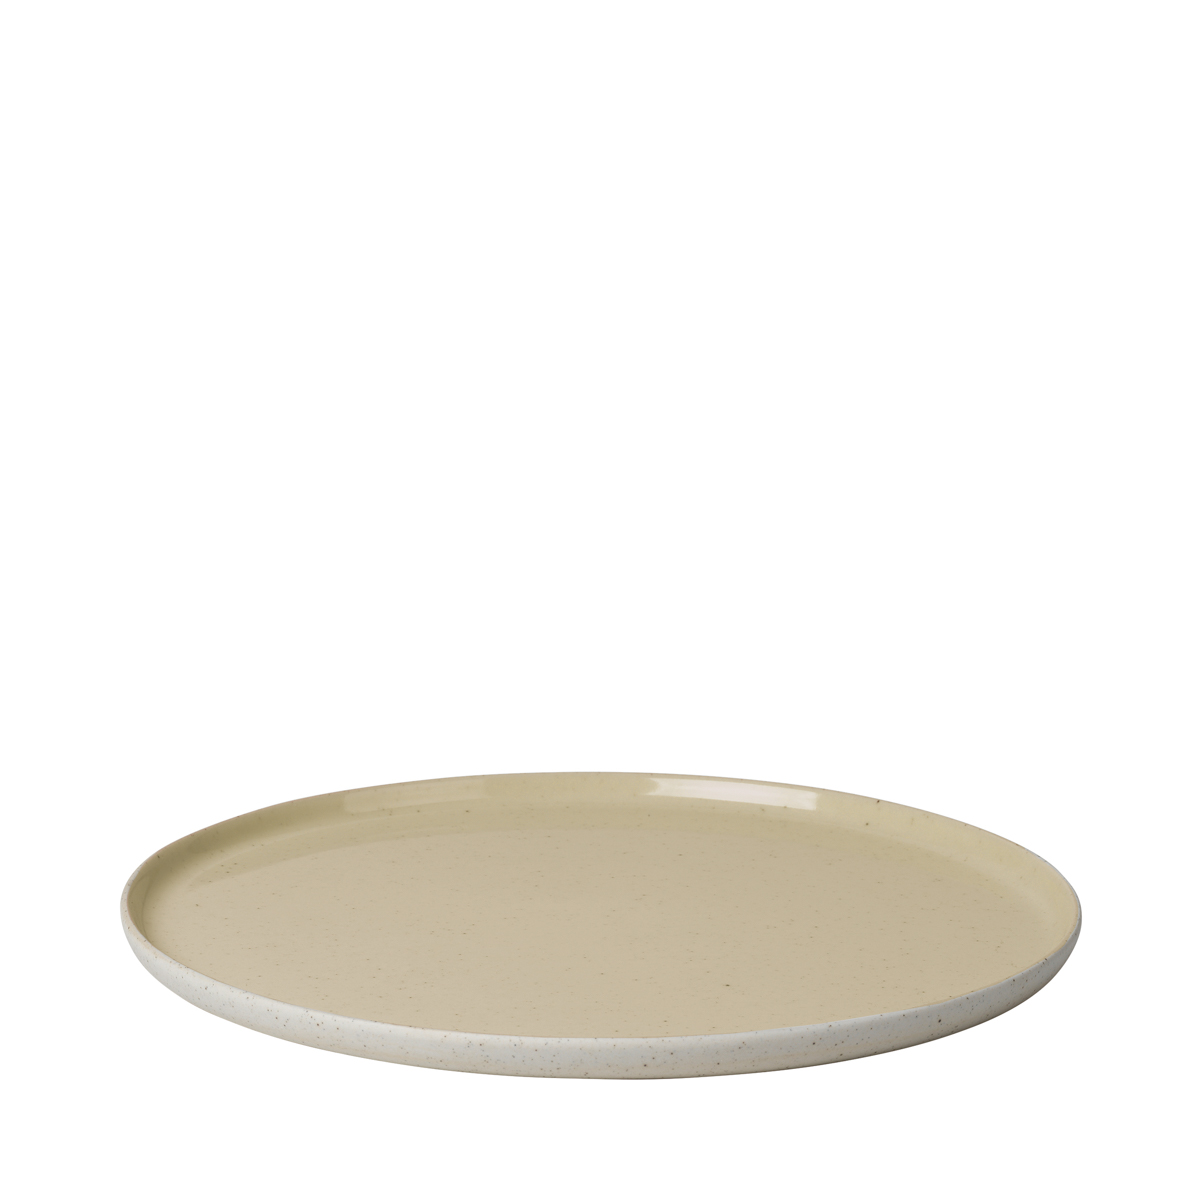 Speiseteller -SABLO- Savannah, Ø 26 cm. Material: Keramik. Von Blomus.